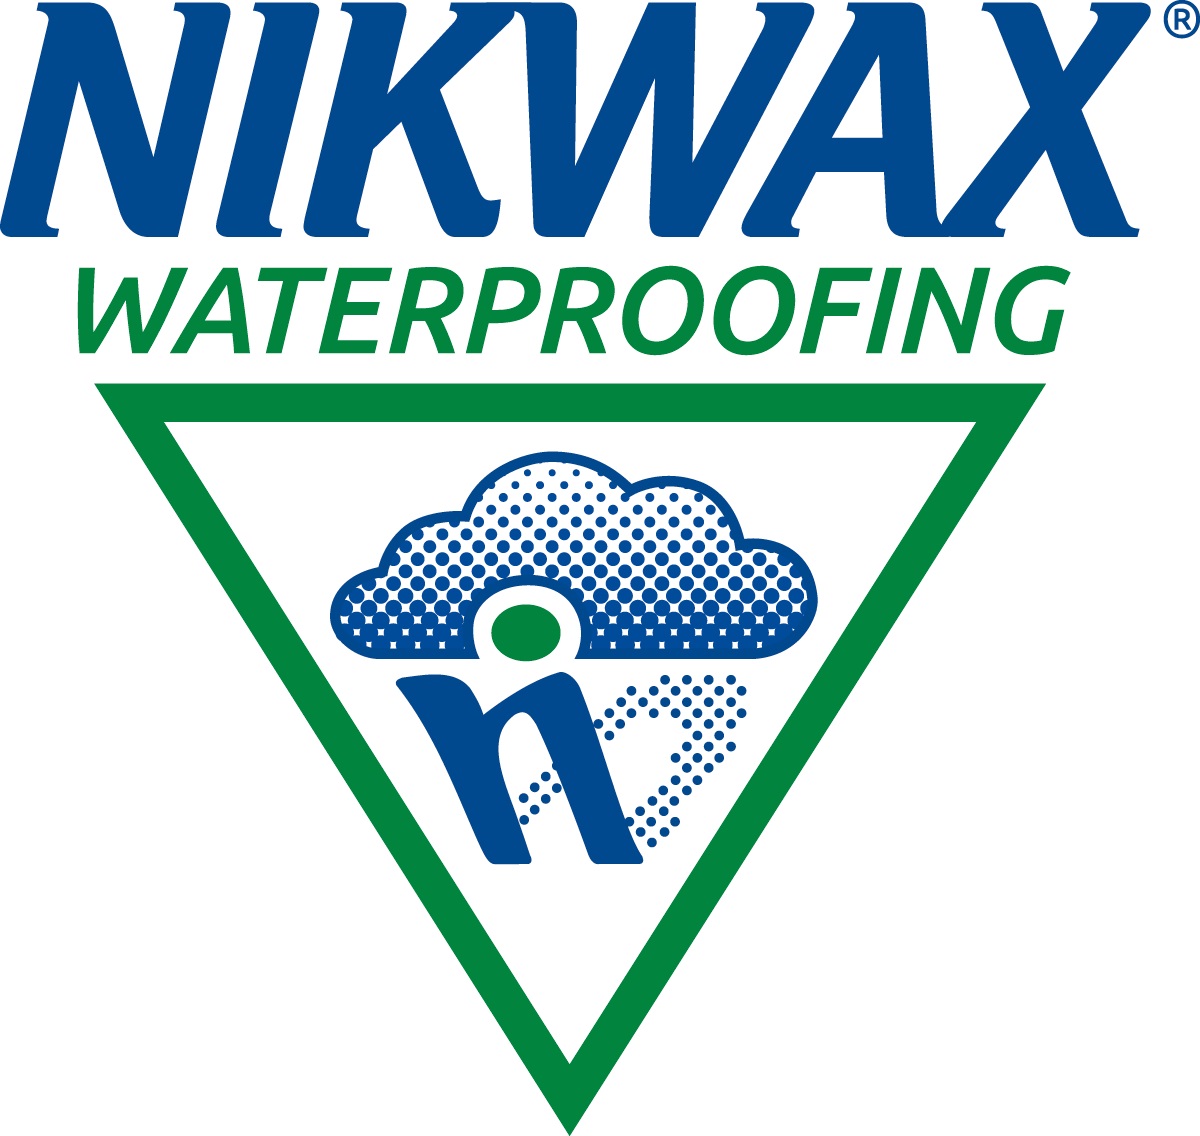 NIKWAX Nikwax_Waterproofing_Triangle_Logo_2017 logo marki